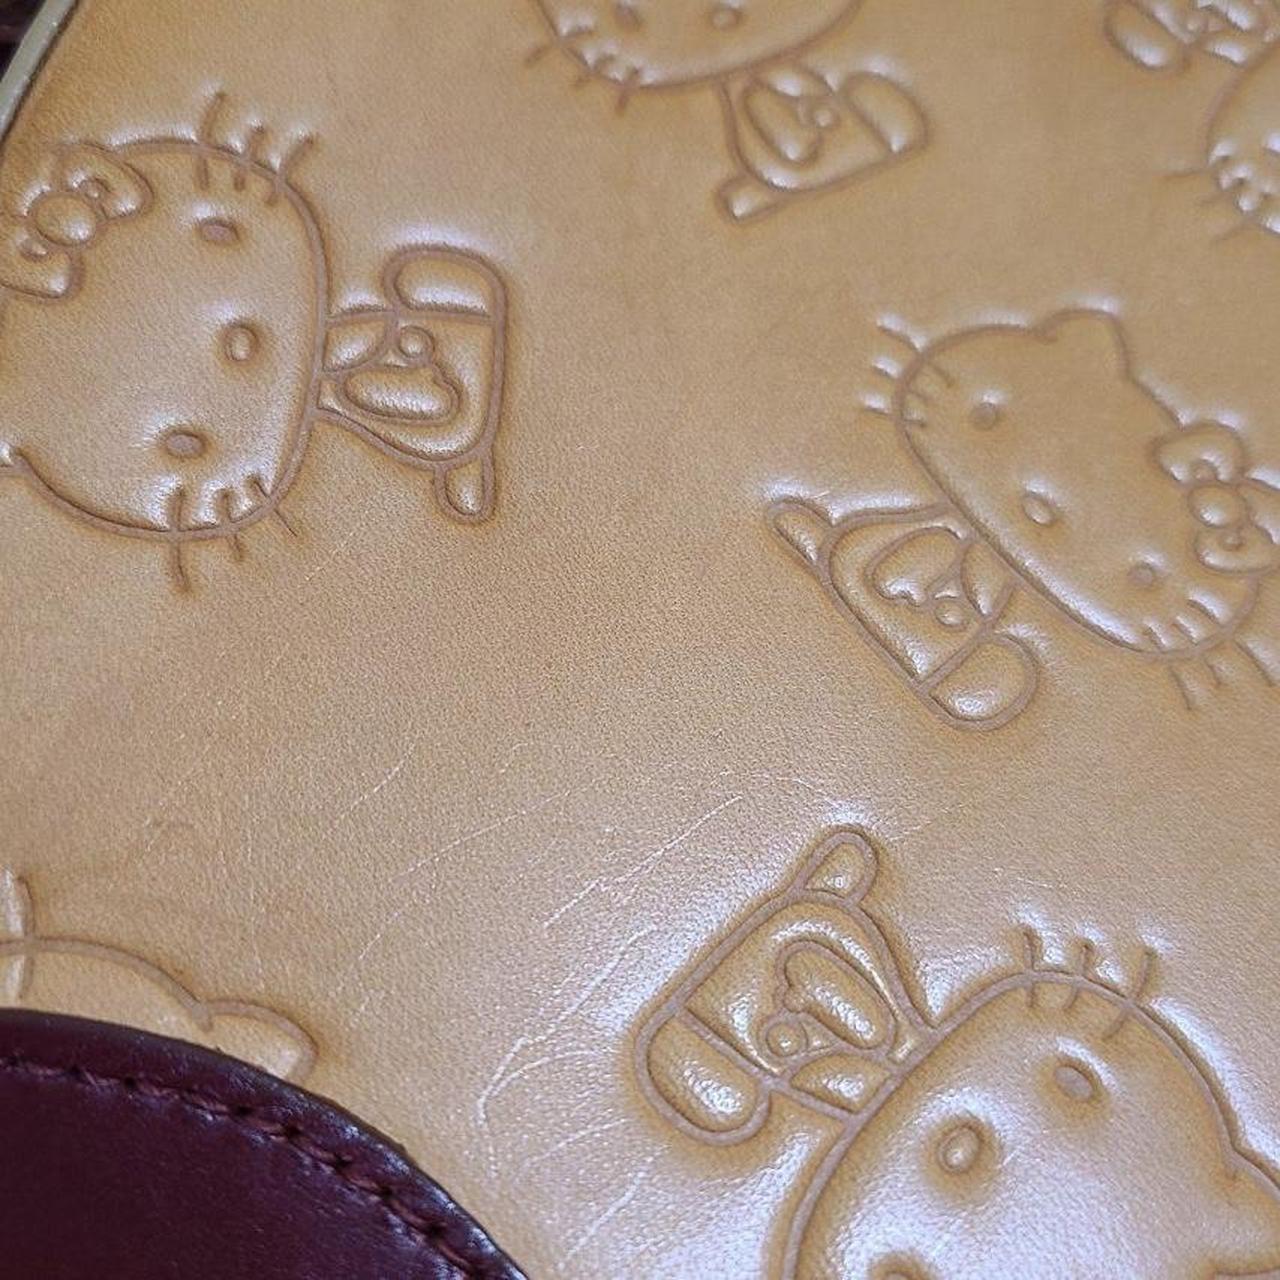 SUPER RARE Sanrio Licensed Hello Kitty Leather - Depop